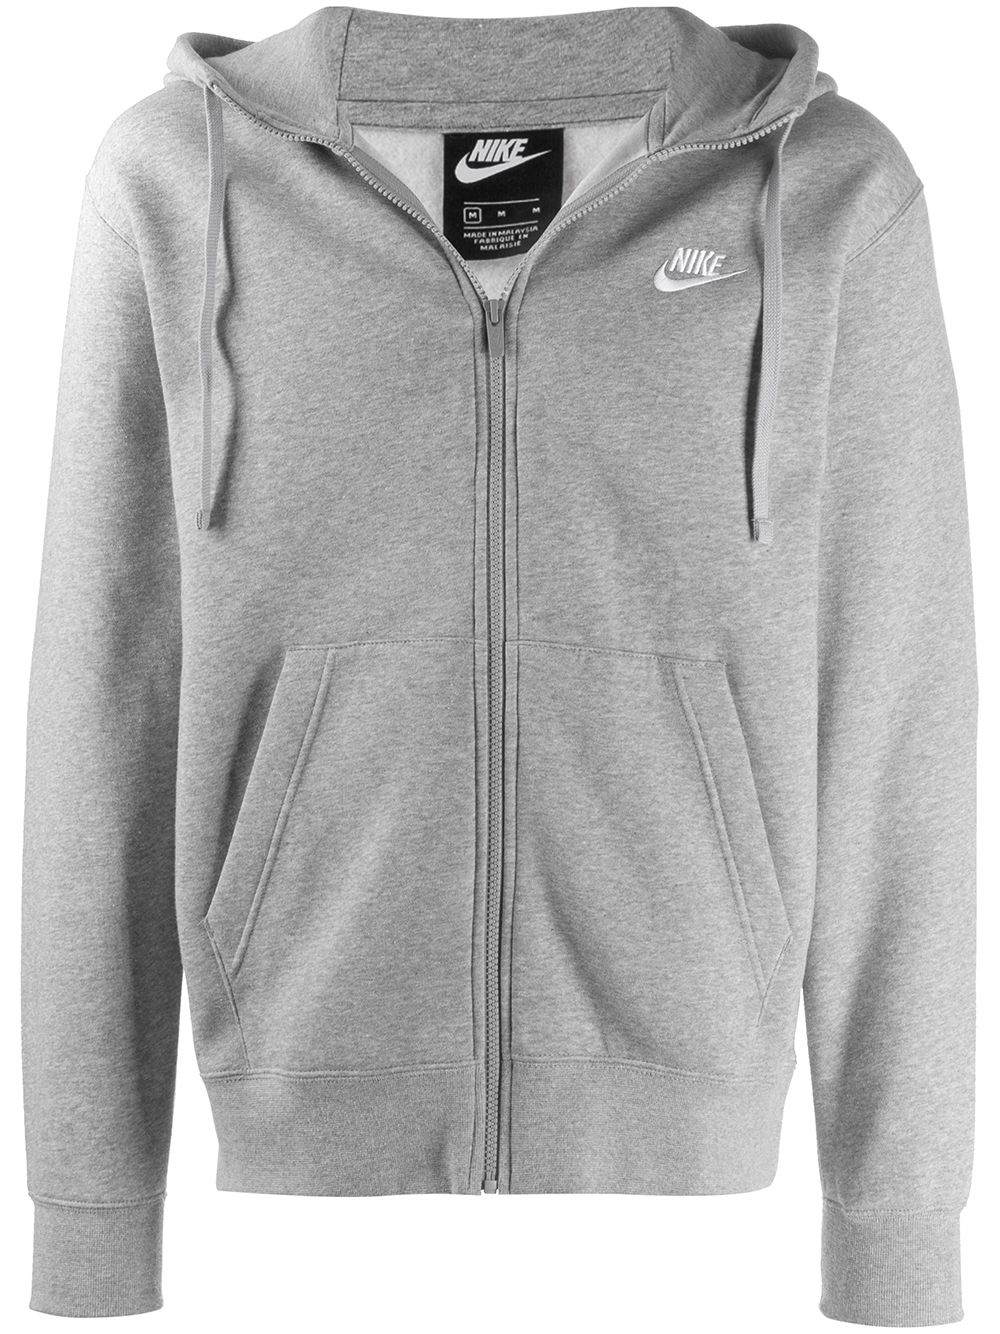 Shop Nike zip up swoosh hoodie with 